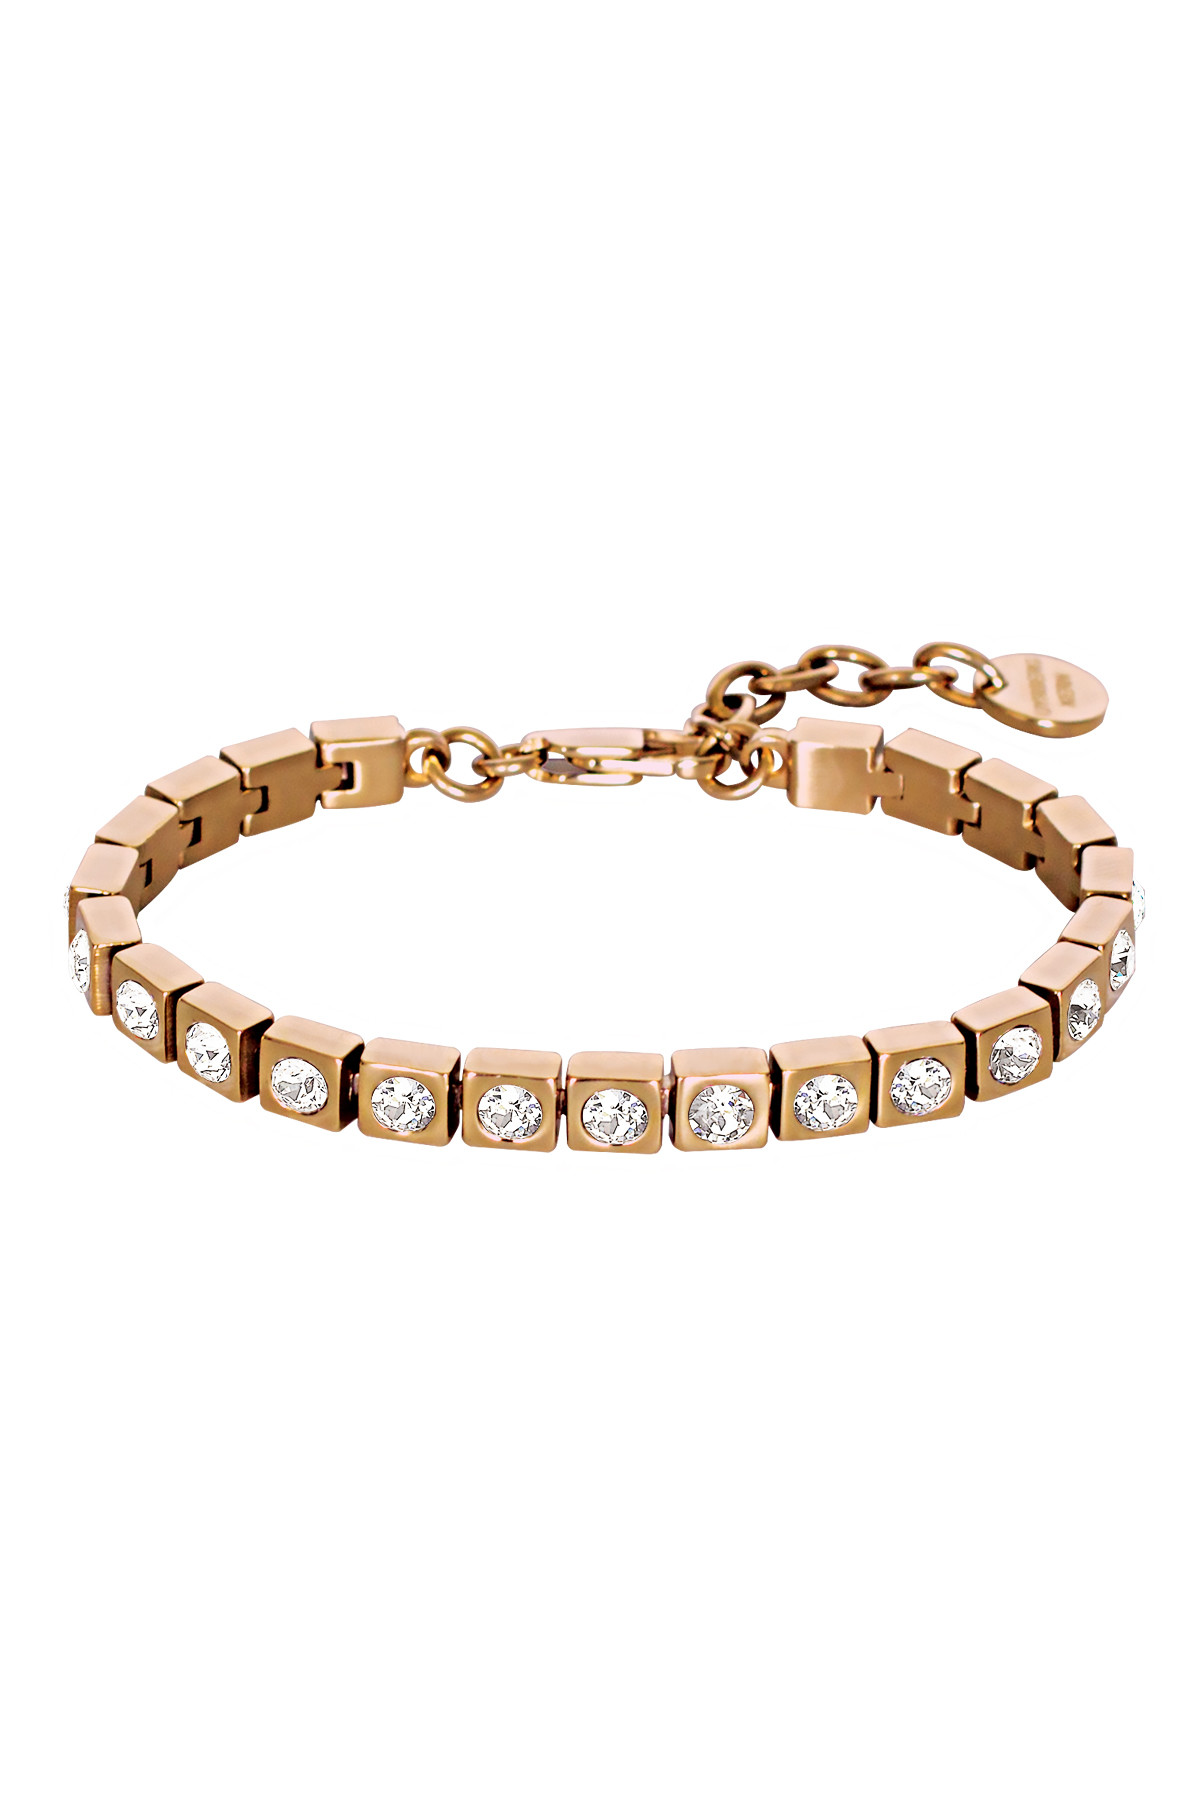 Dyrberg/Kern Cone Bracelet, Color: Gold/Crystal, Onesize, Women